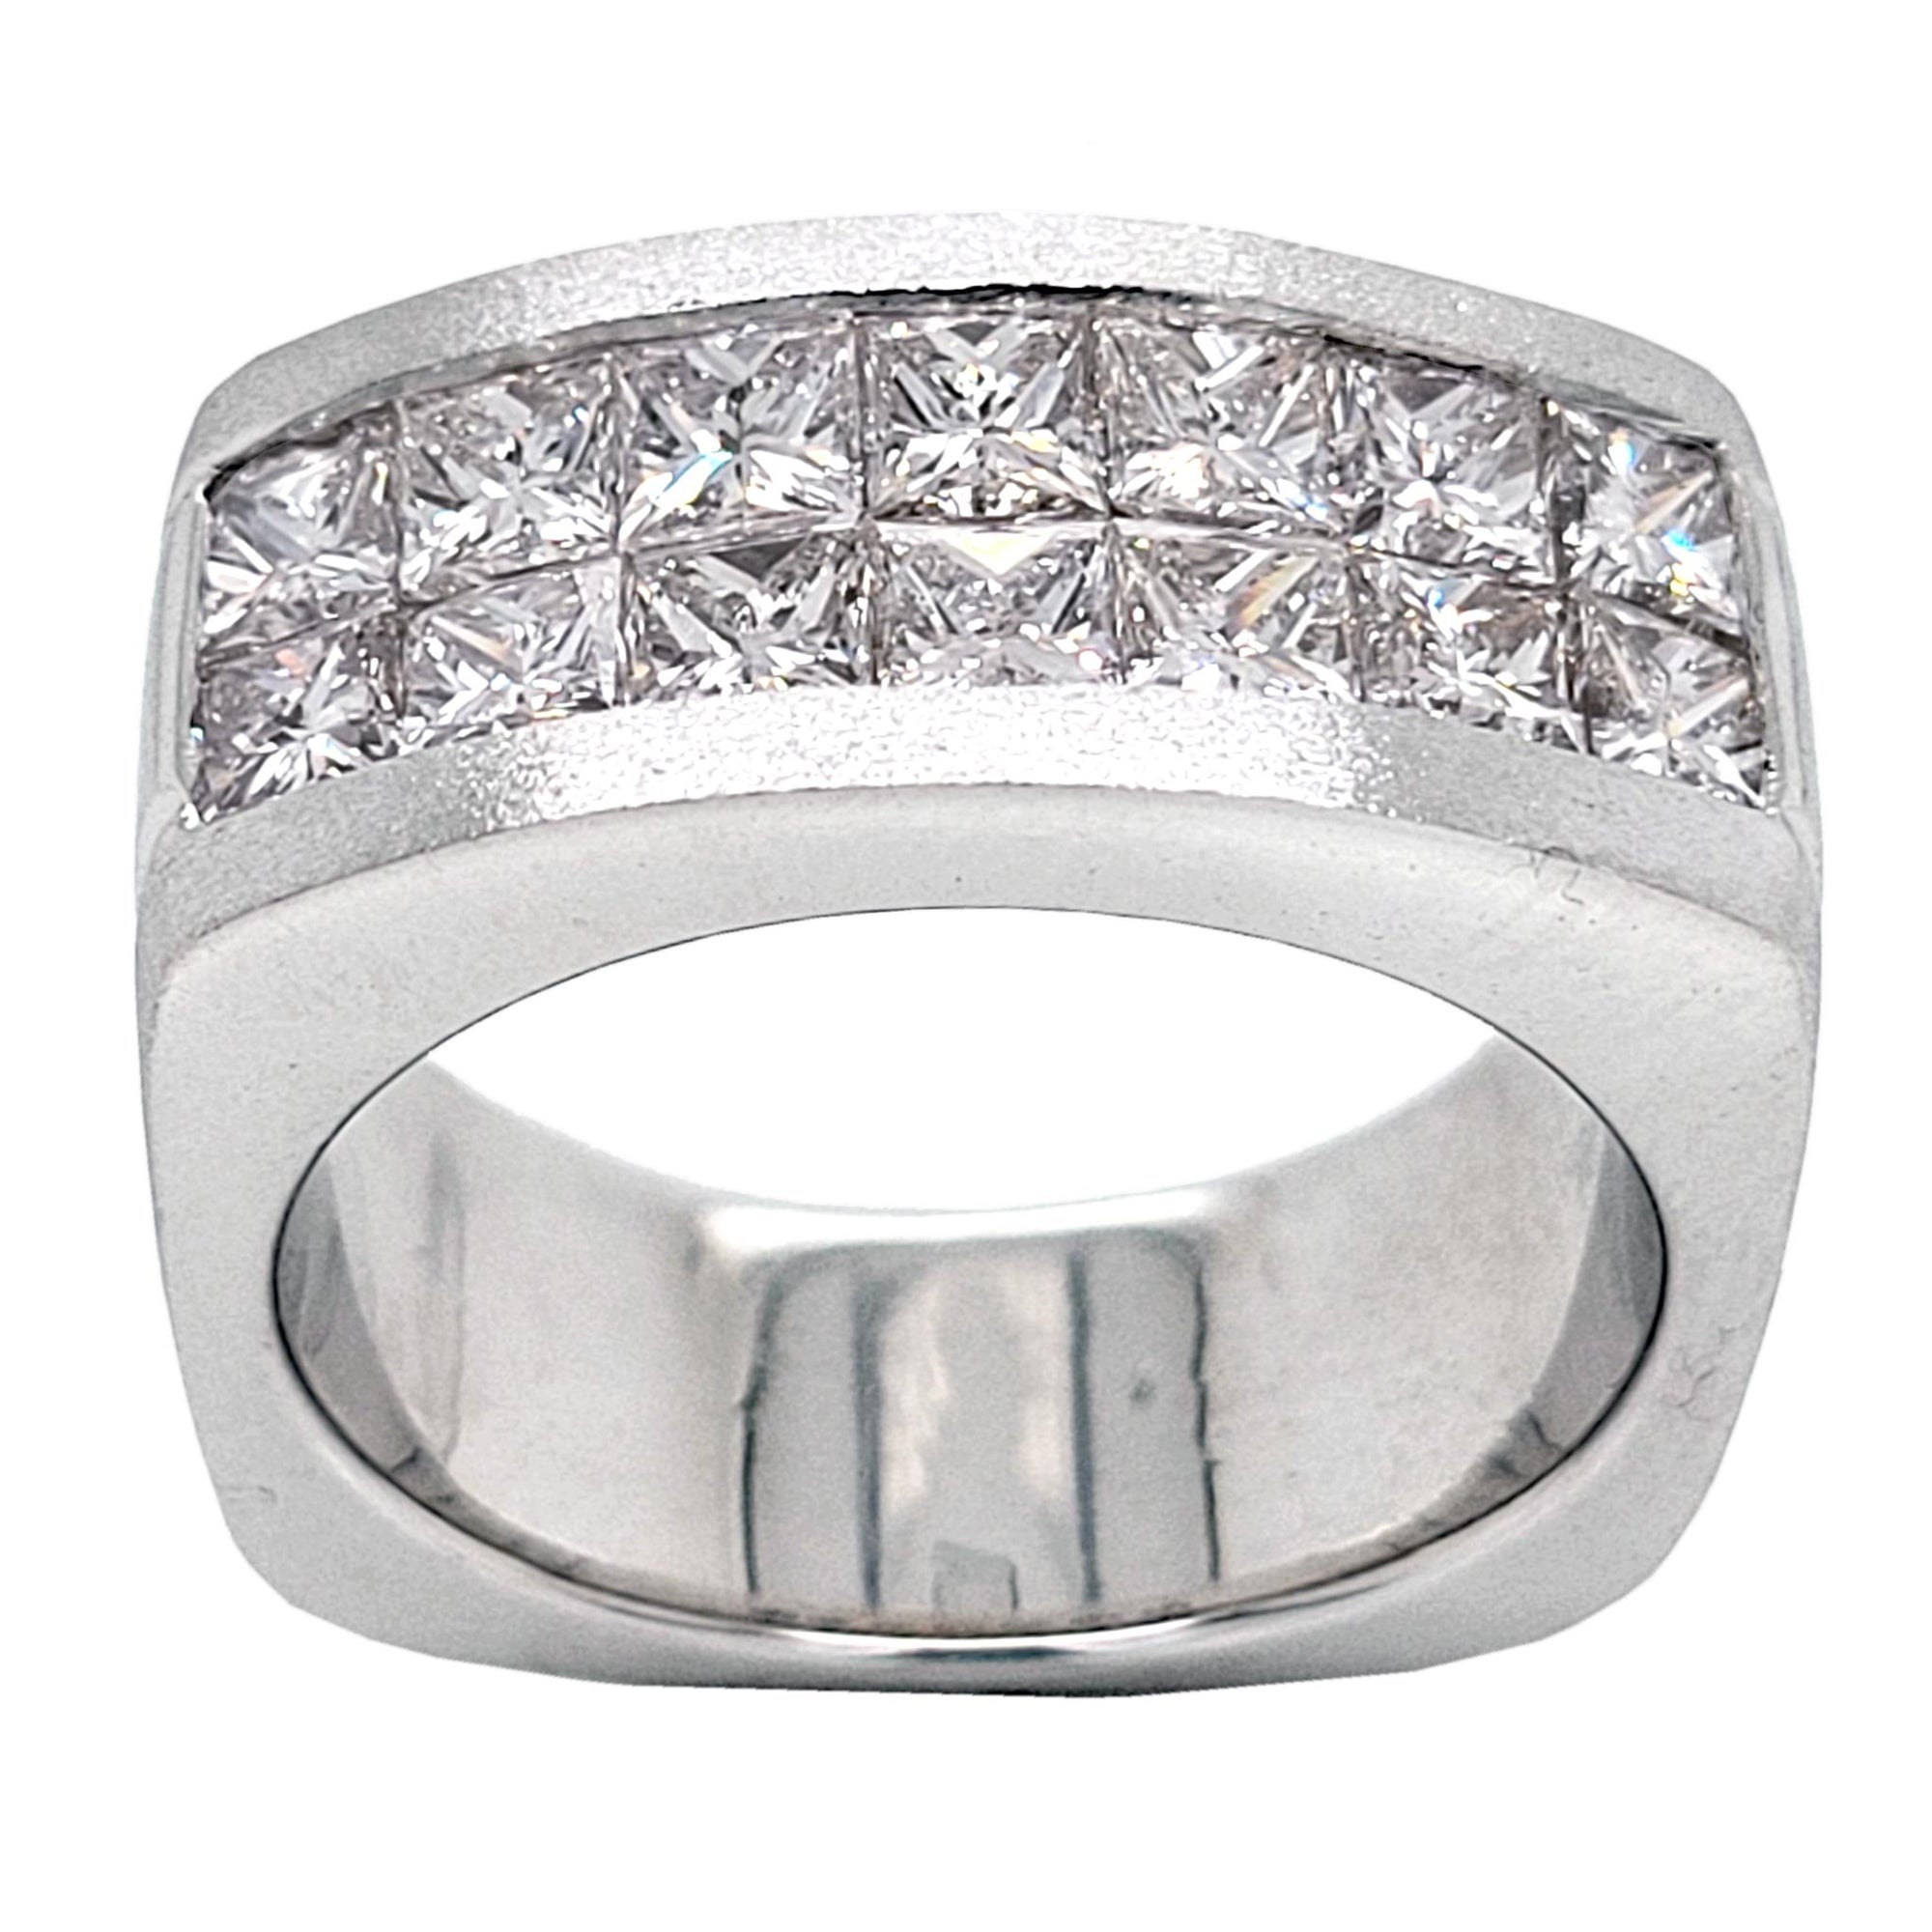 3.51 Carat Princess Cut Diamond 18 Karat Gents Ring